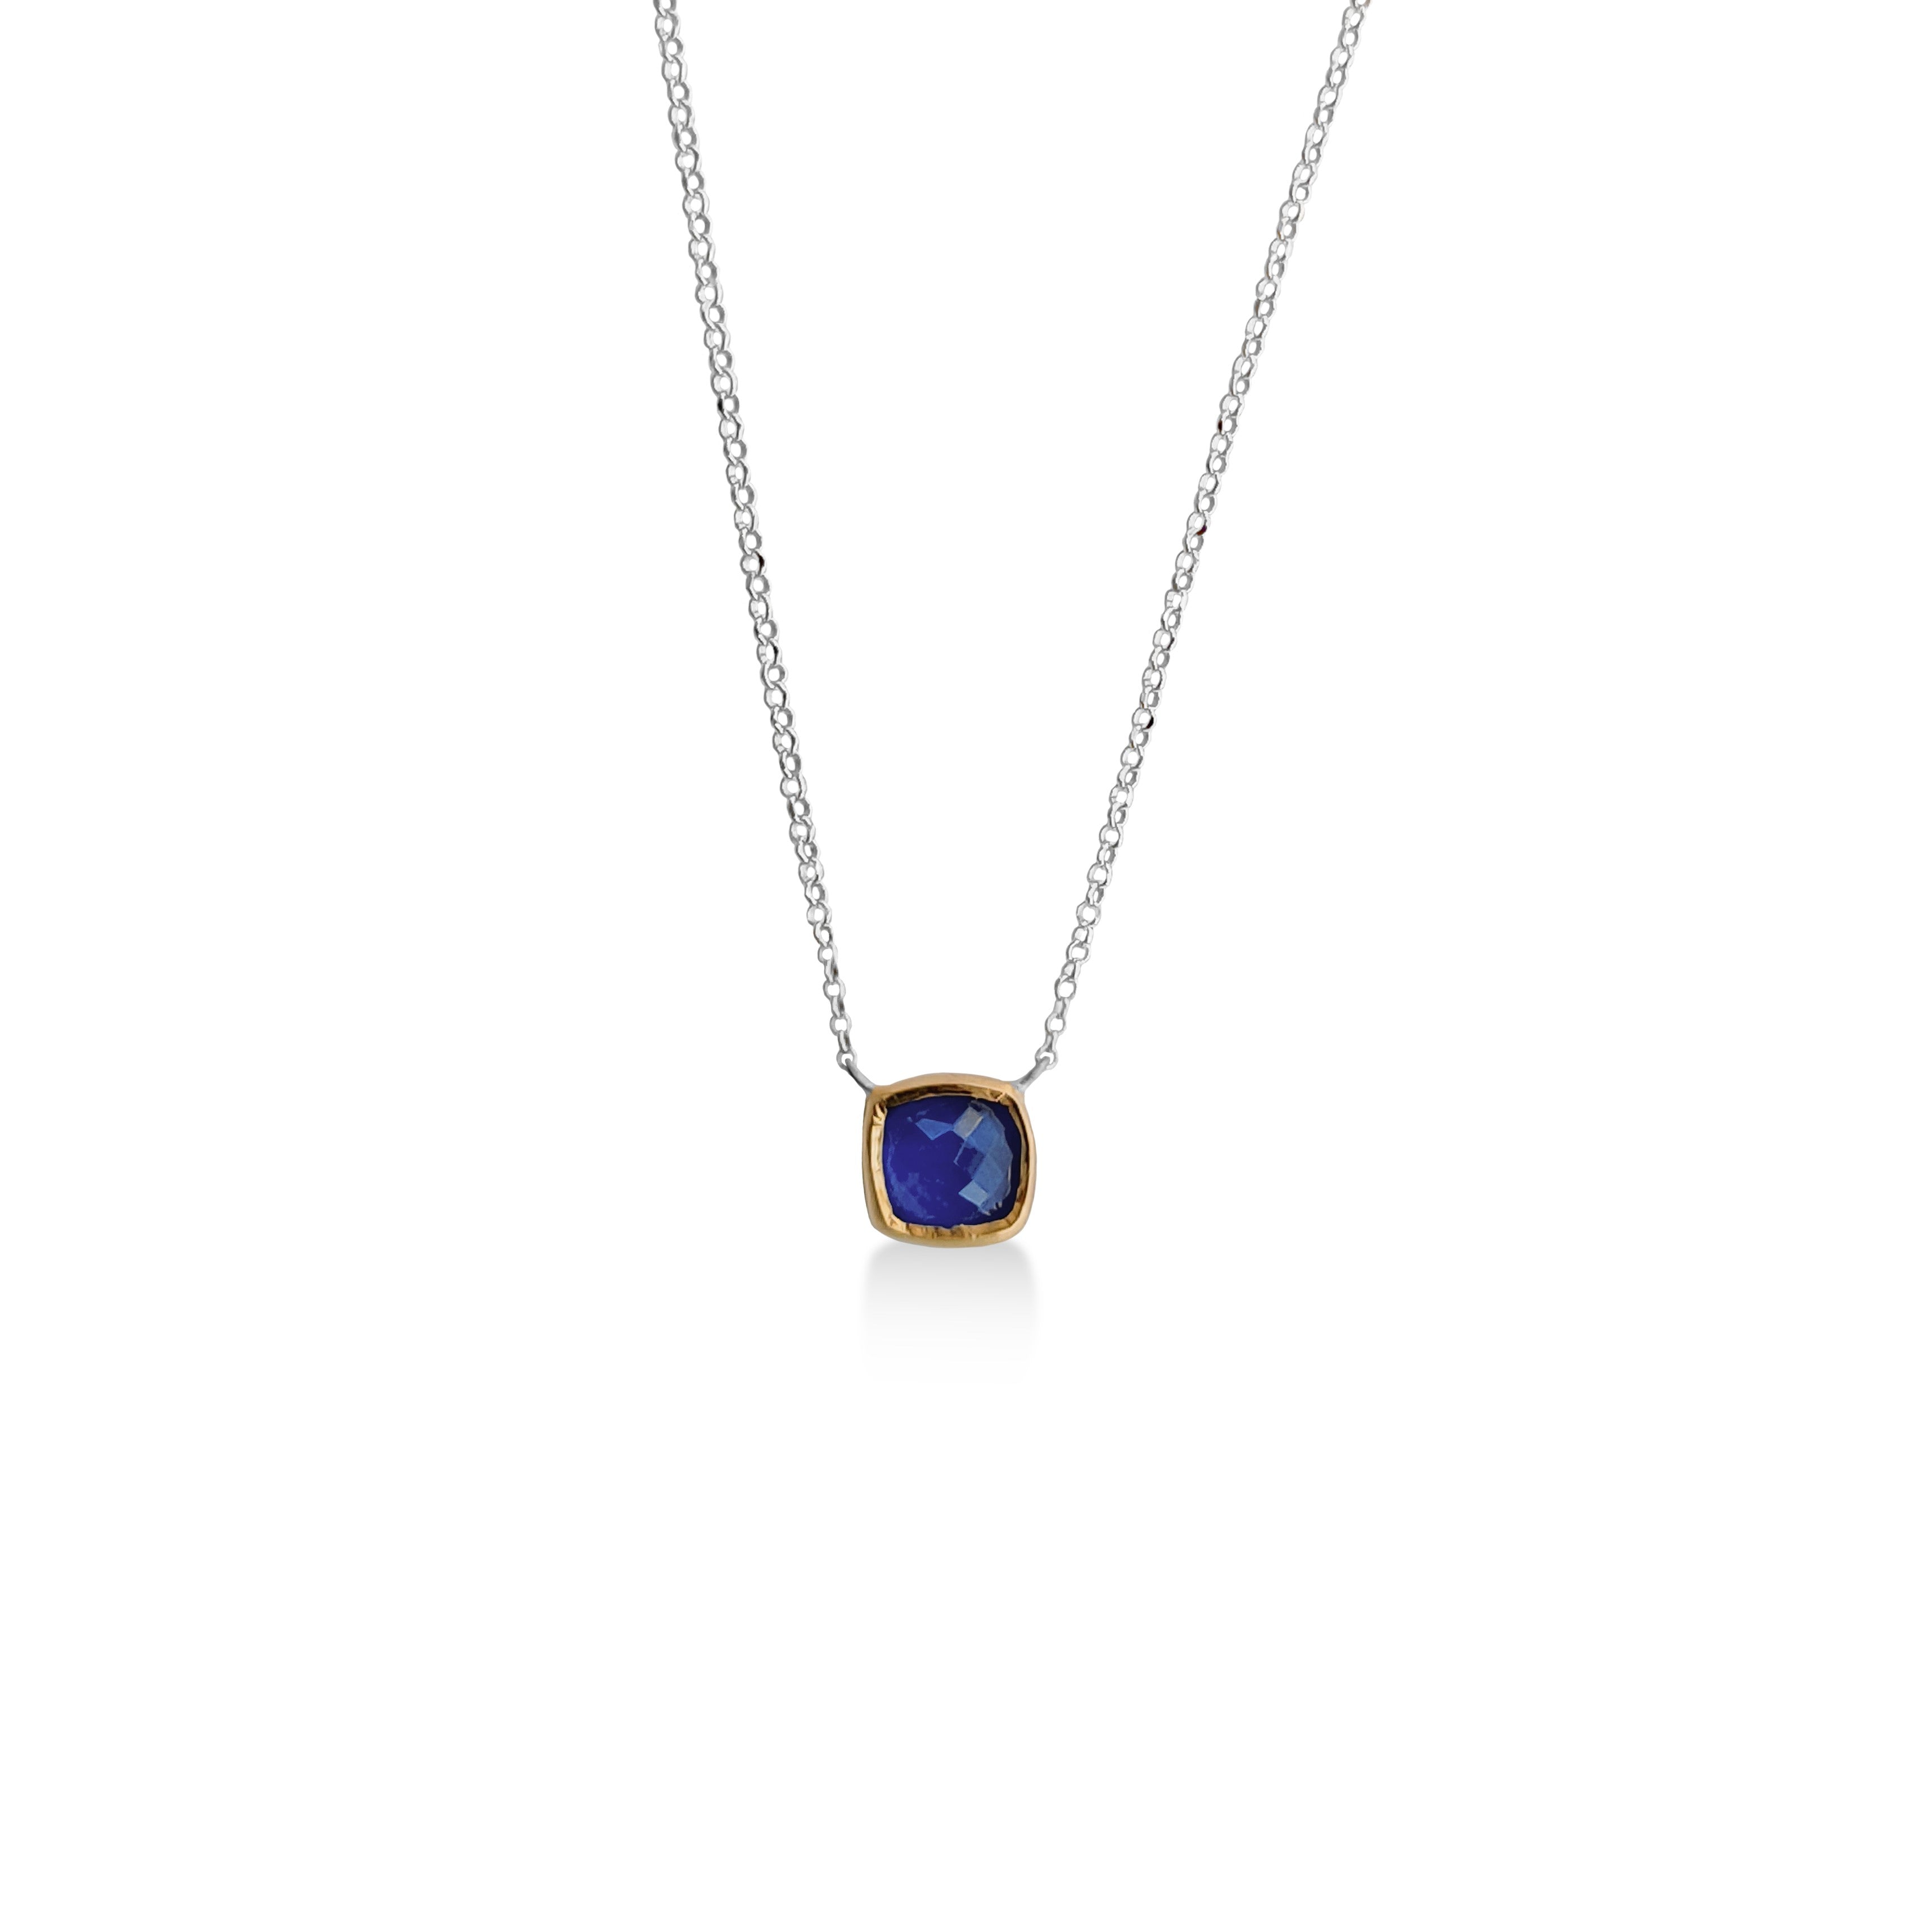 Natural Lapis Lazuli - The Nancy Smillie Shop - Art, Jewellery & Designer Gifts Glasgow